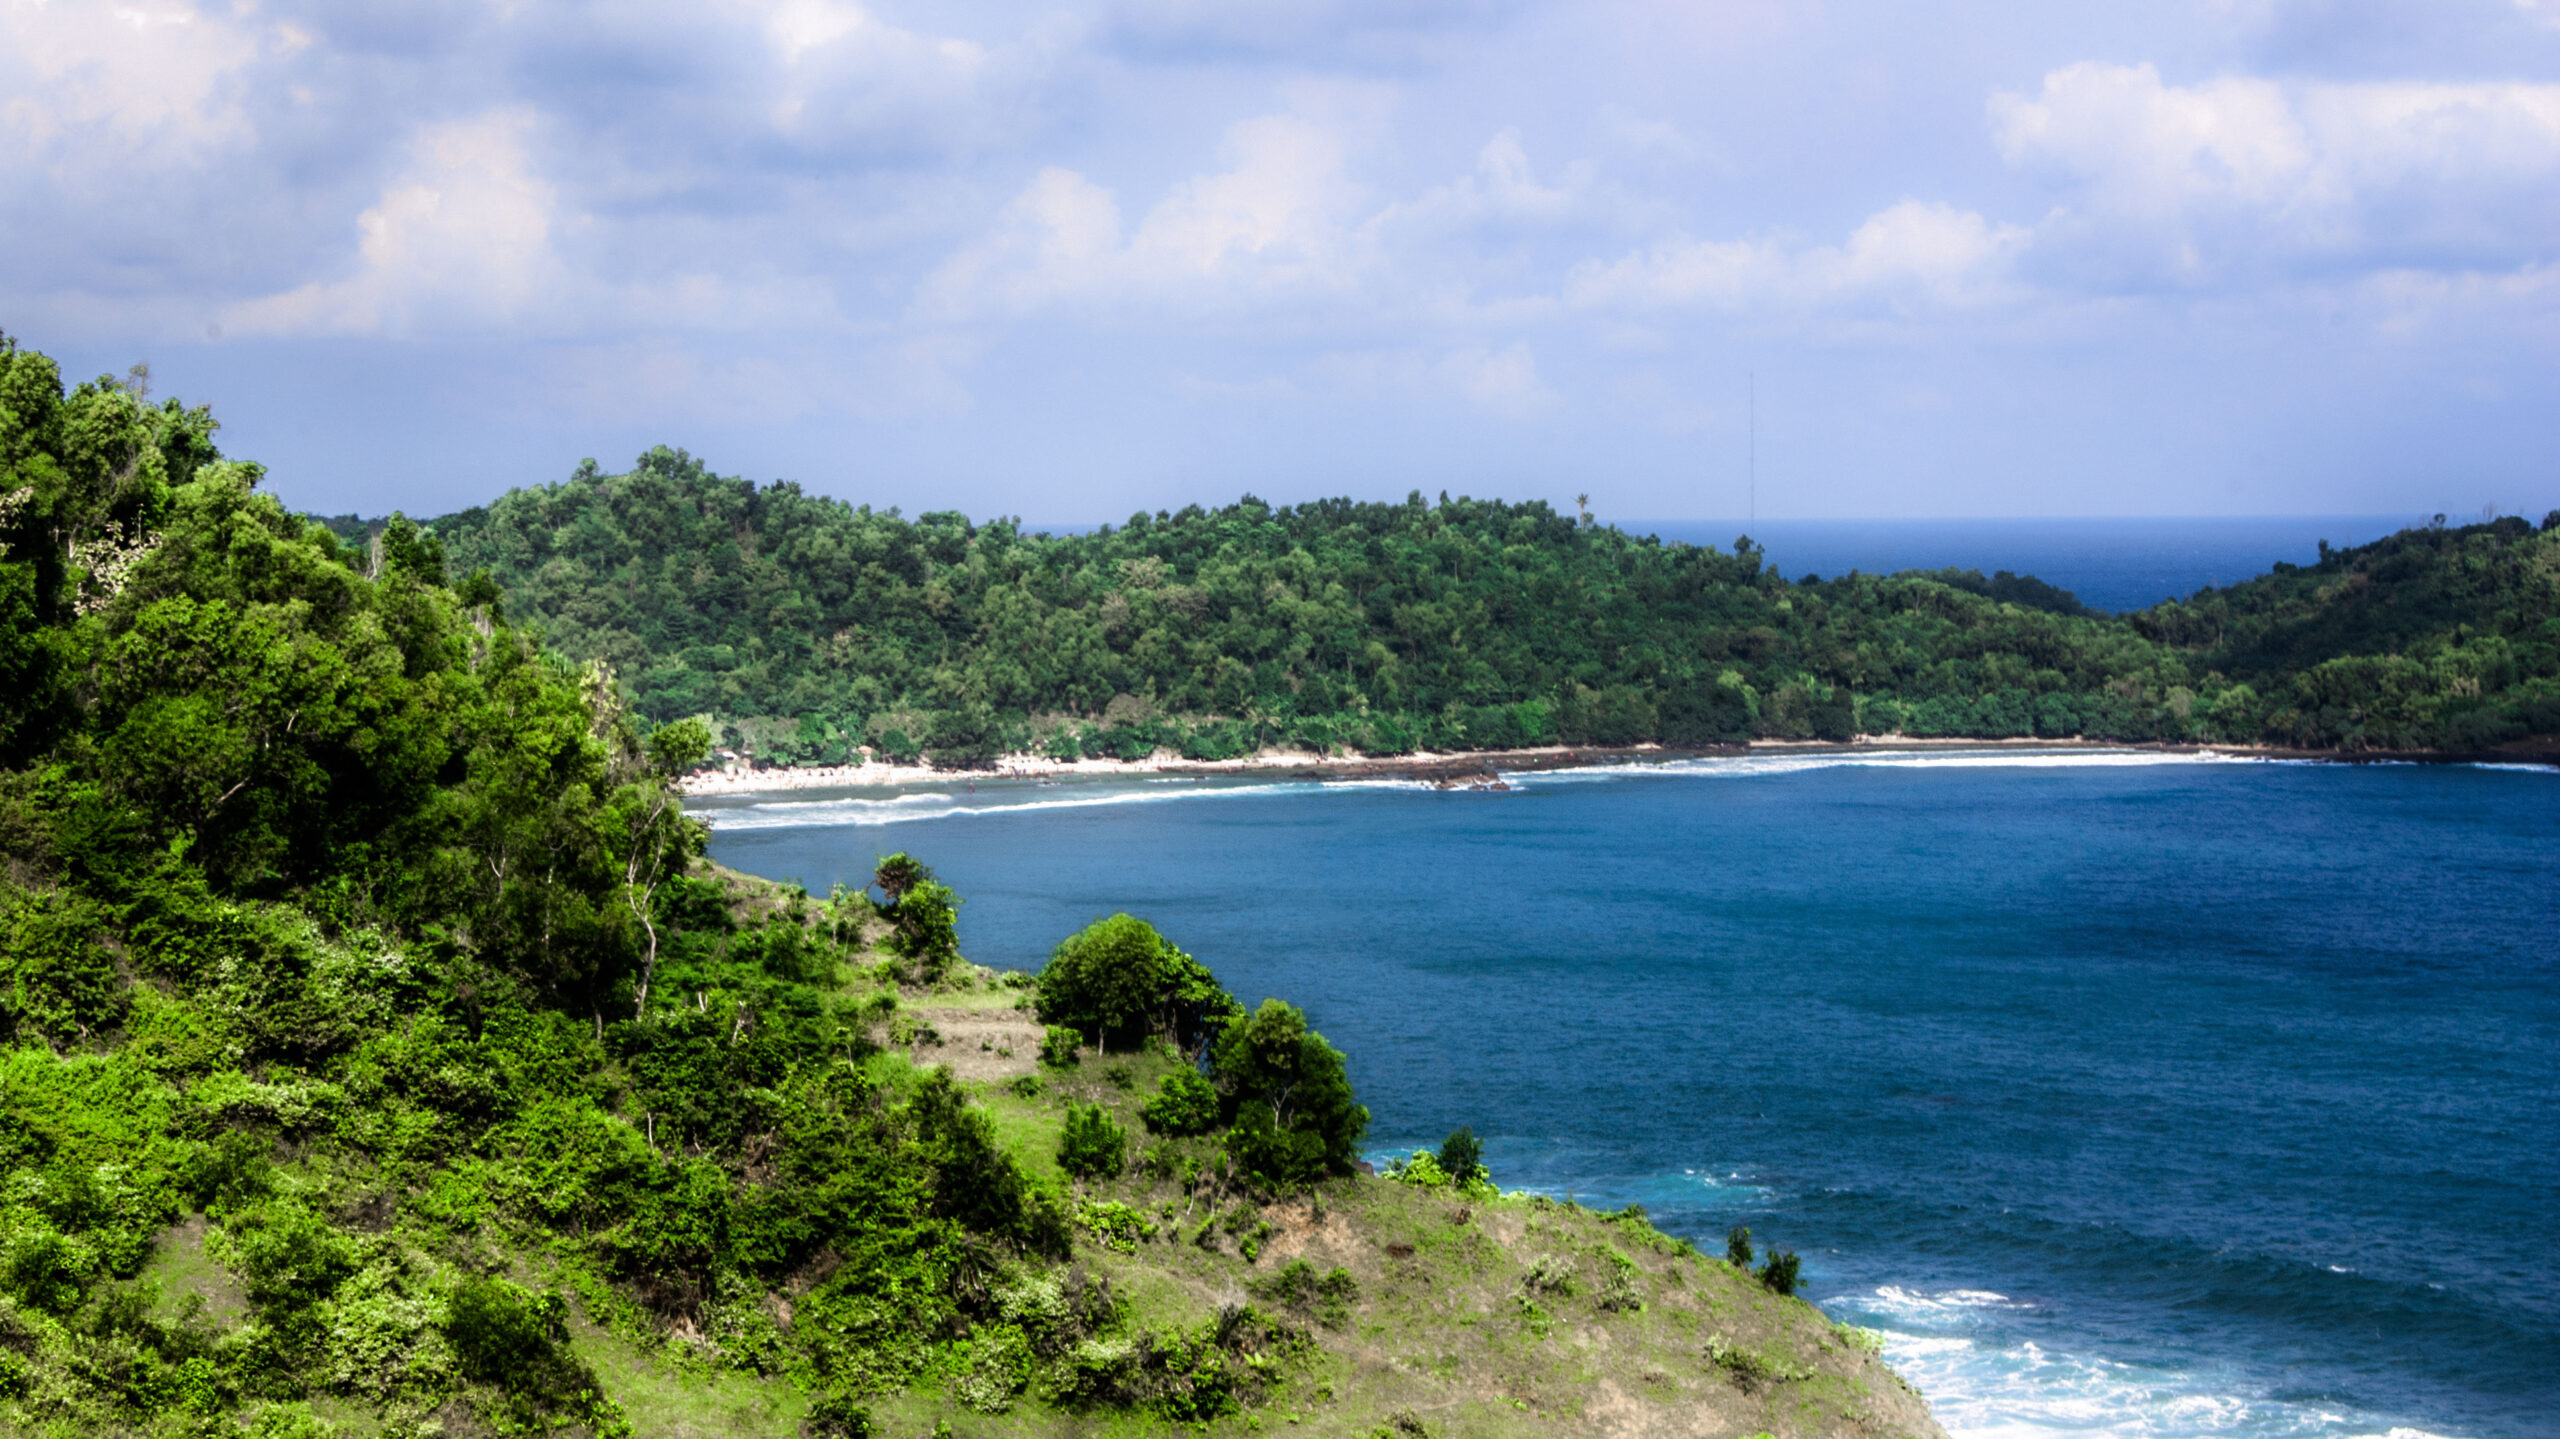 Pesona Keindahan Wisata Pantai Pesewan di Girisubo Gunung Kidul Yogyakarta